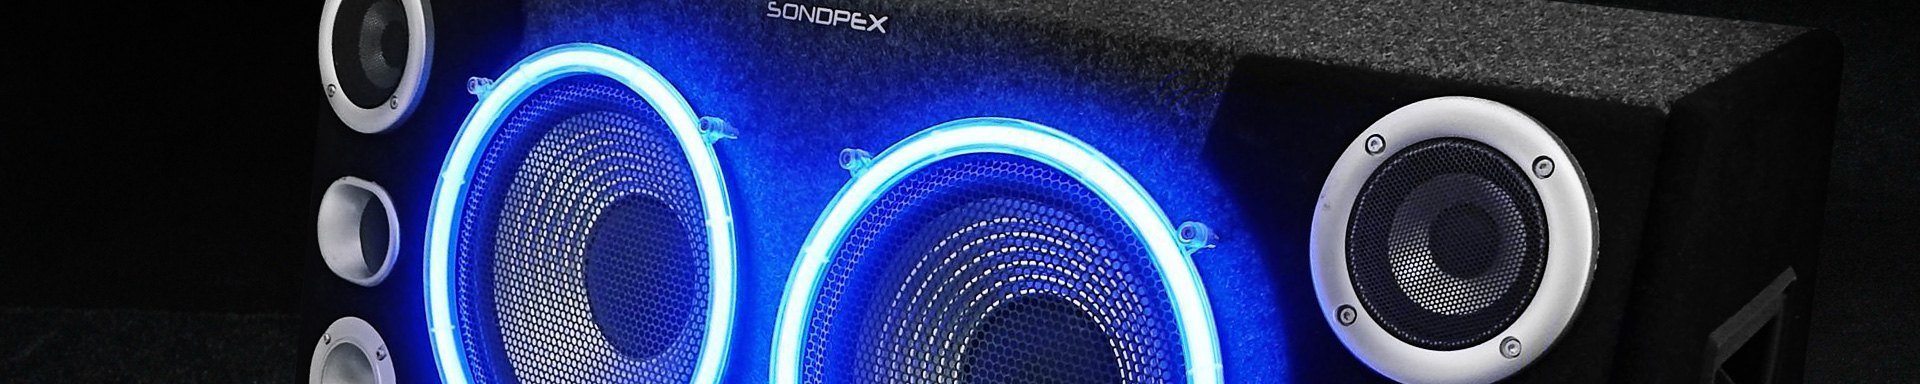 Sondpex Bluetooth